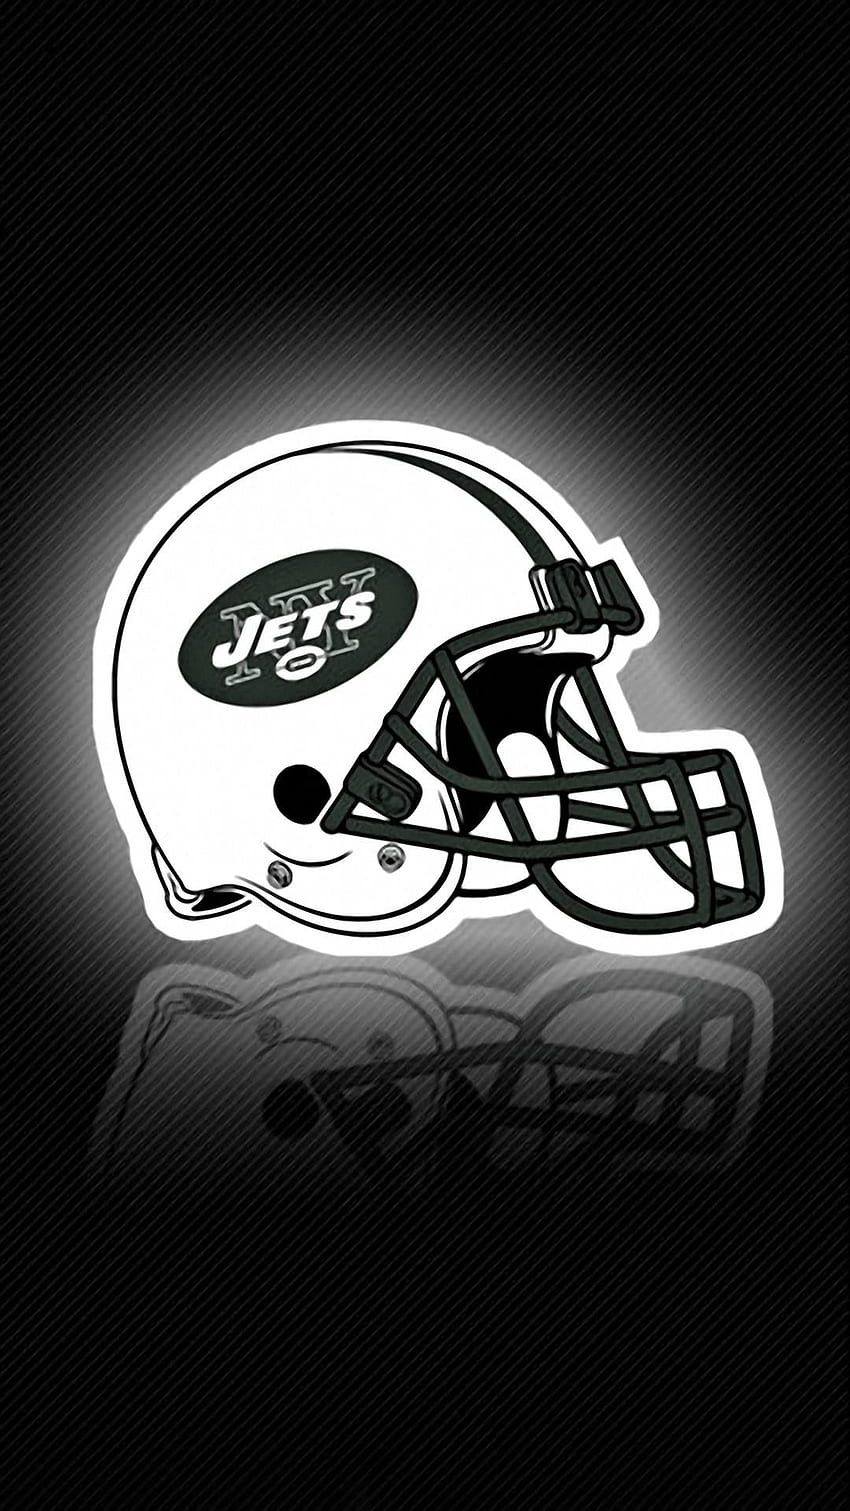 Ny Jets, colecciones de. New york jets, Nfl football art, New york jets football fondo de pantalla del teléfono